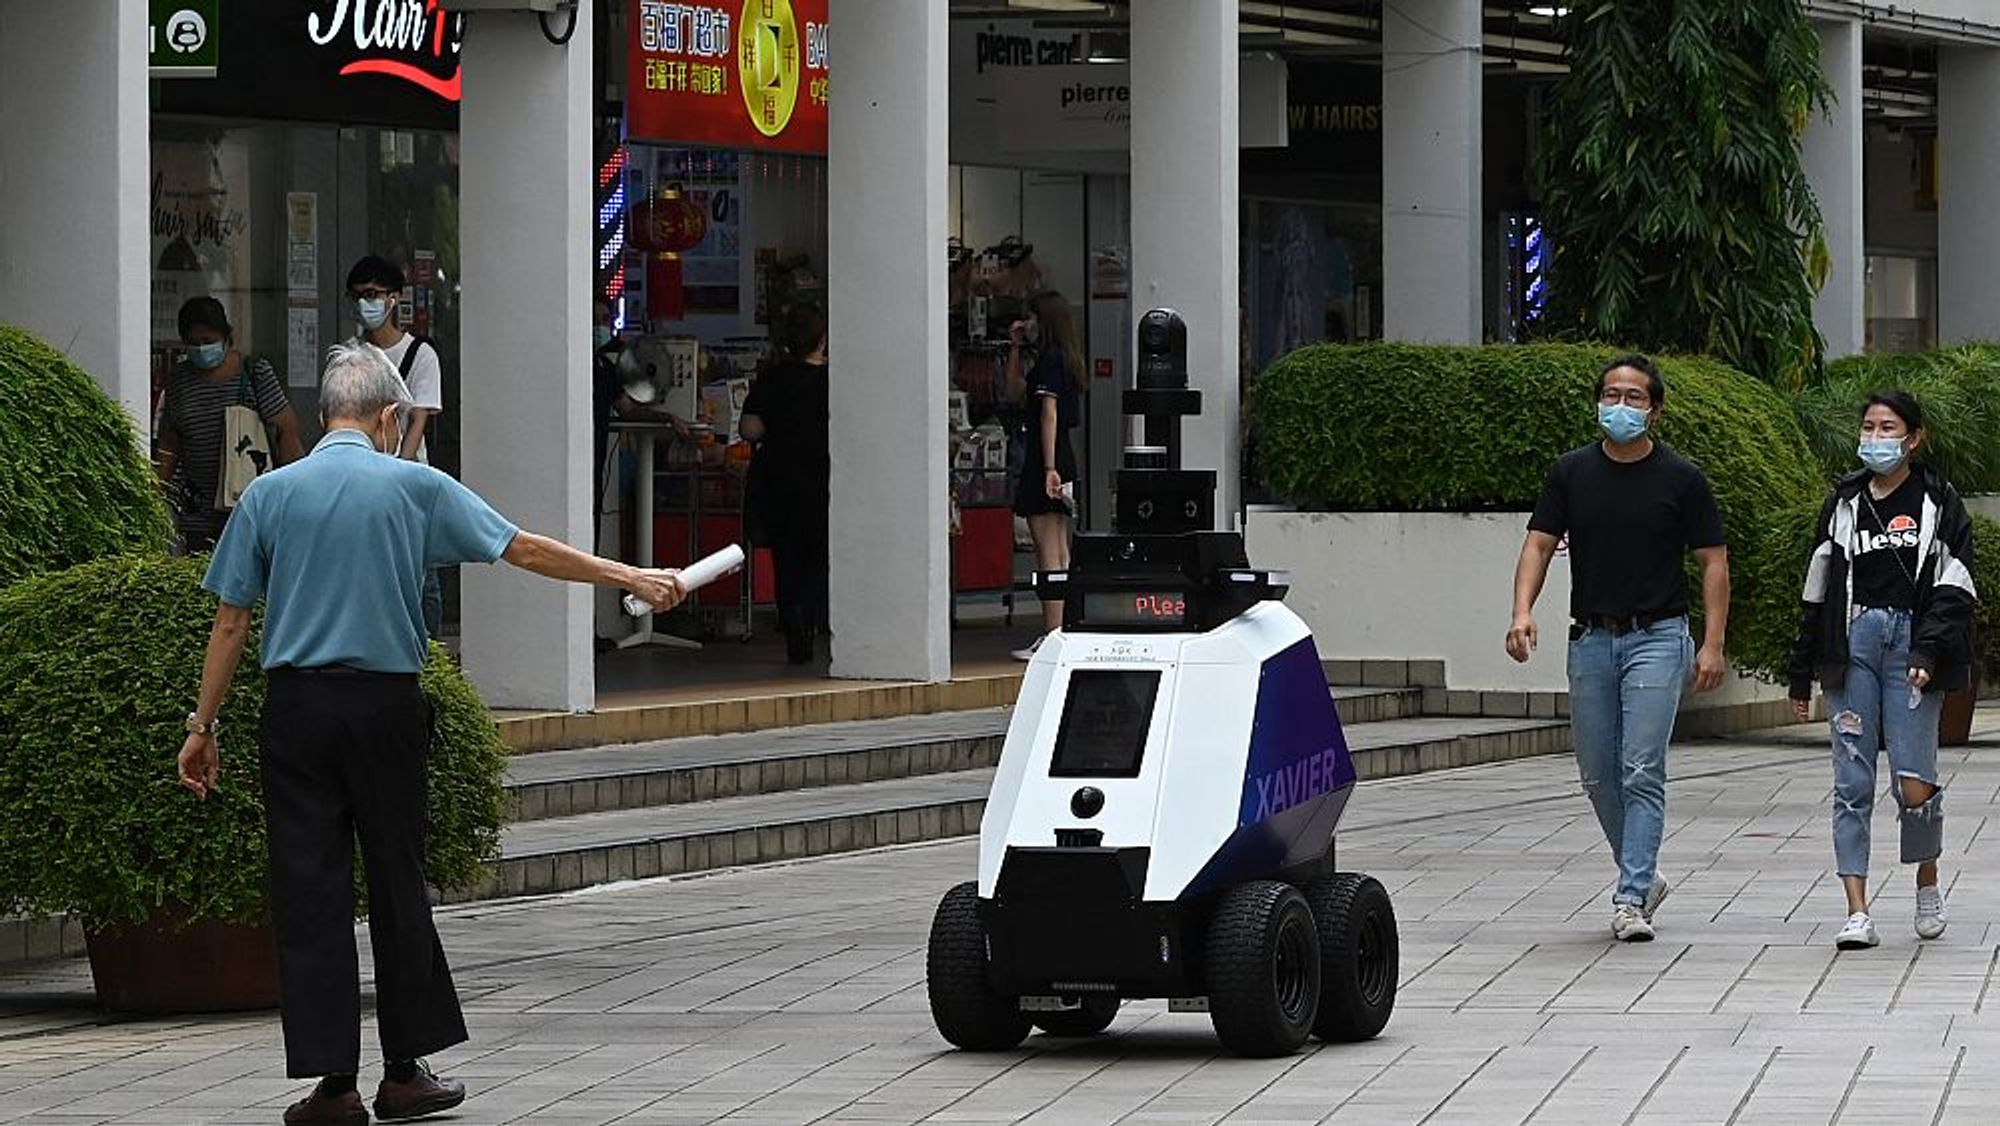 Meet Xavier, the 'anti-social behaviour' robot on patrol in Singapore